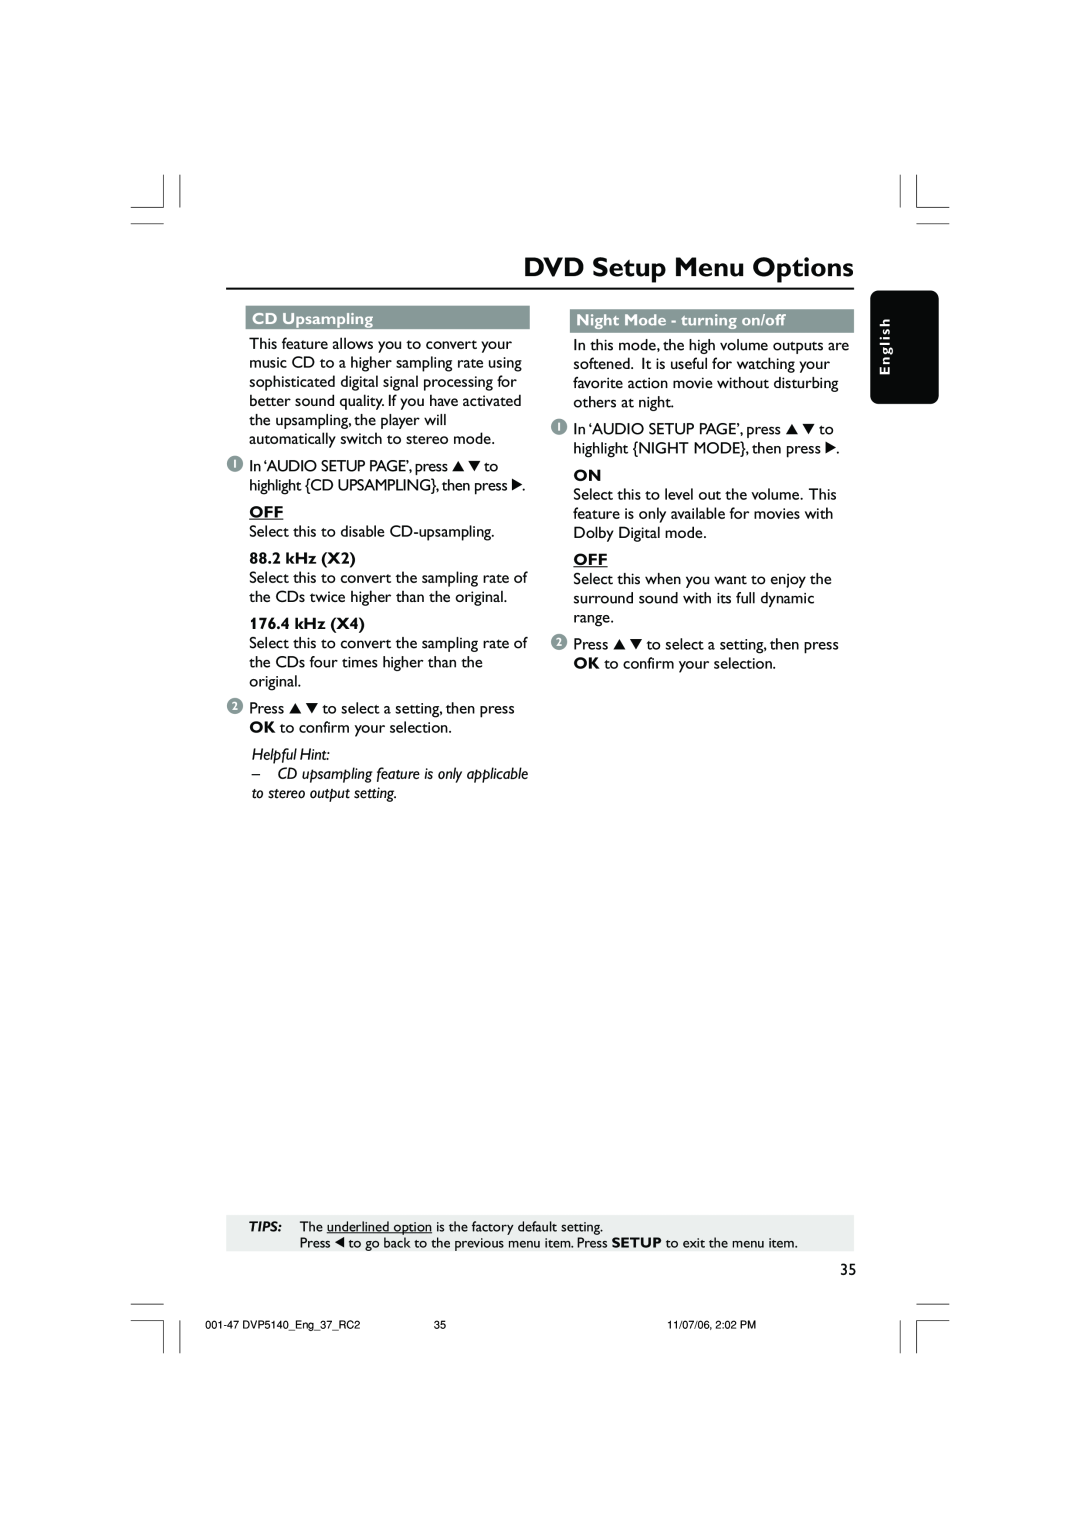 Philips DVP5140 DVD Setup Menu Options, CD Upsampling, Night Mode - turning on/off, 88.2 kHz, 176.4 kHz, Helpful Hint 